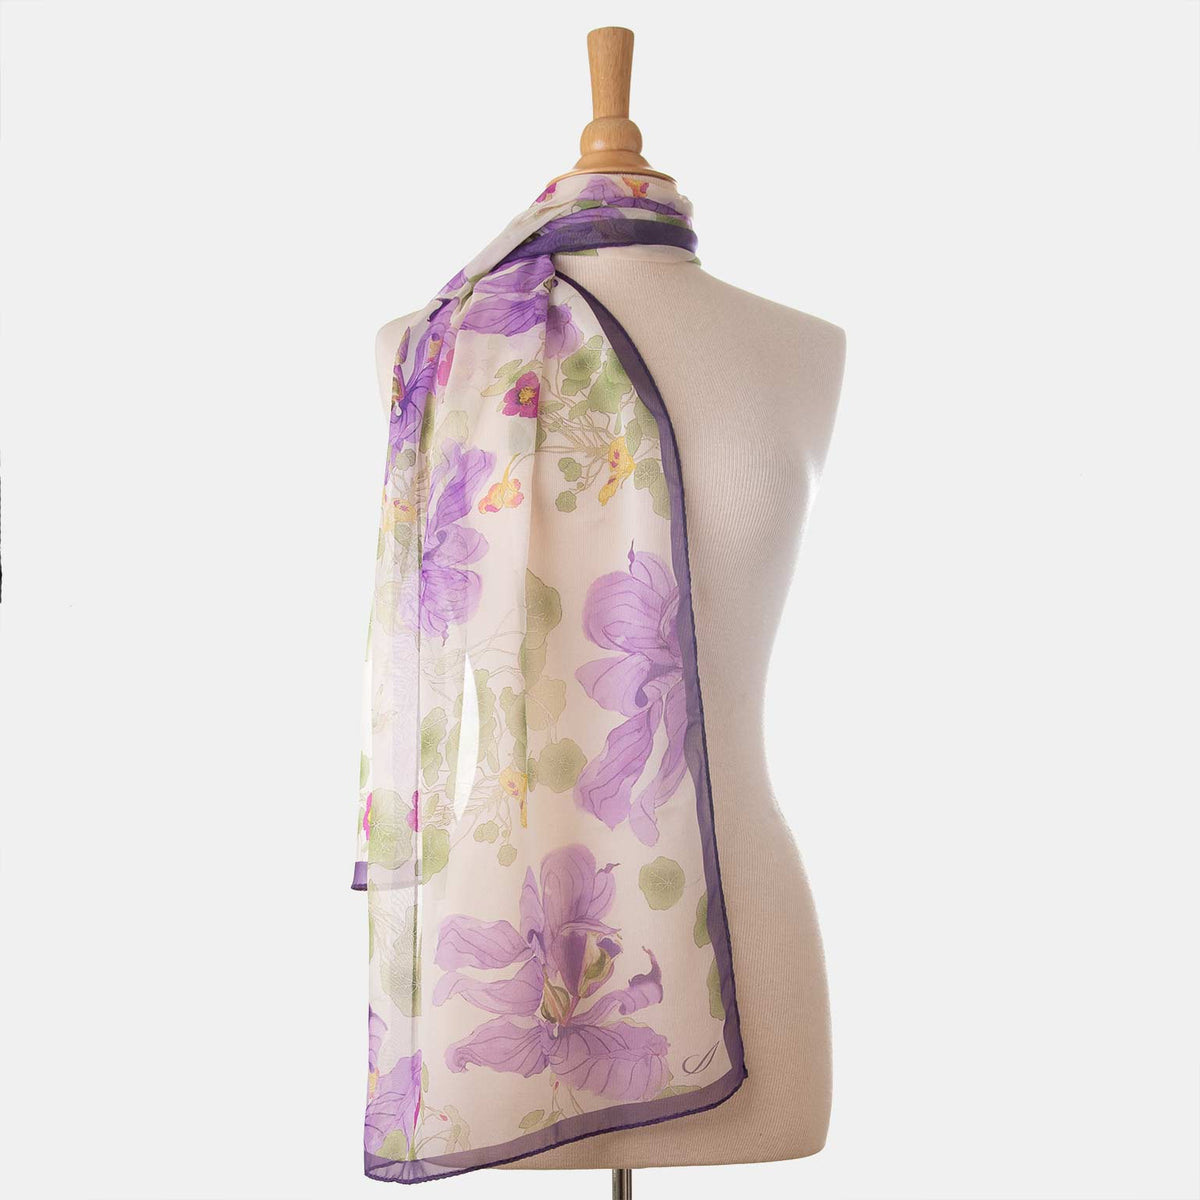 Lavender Sheer Silk Floral Long Scarf